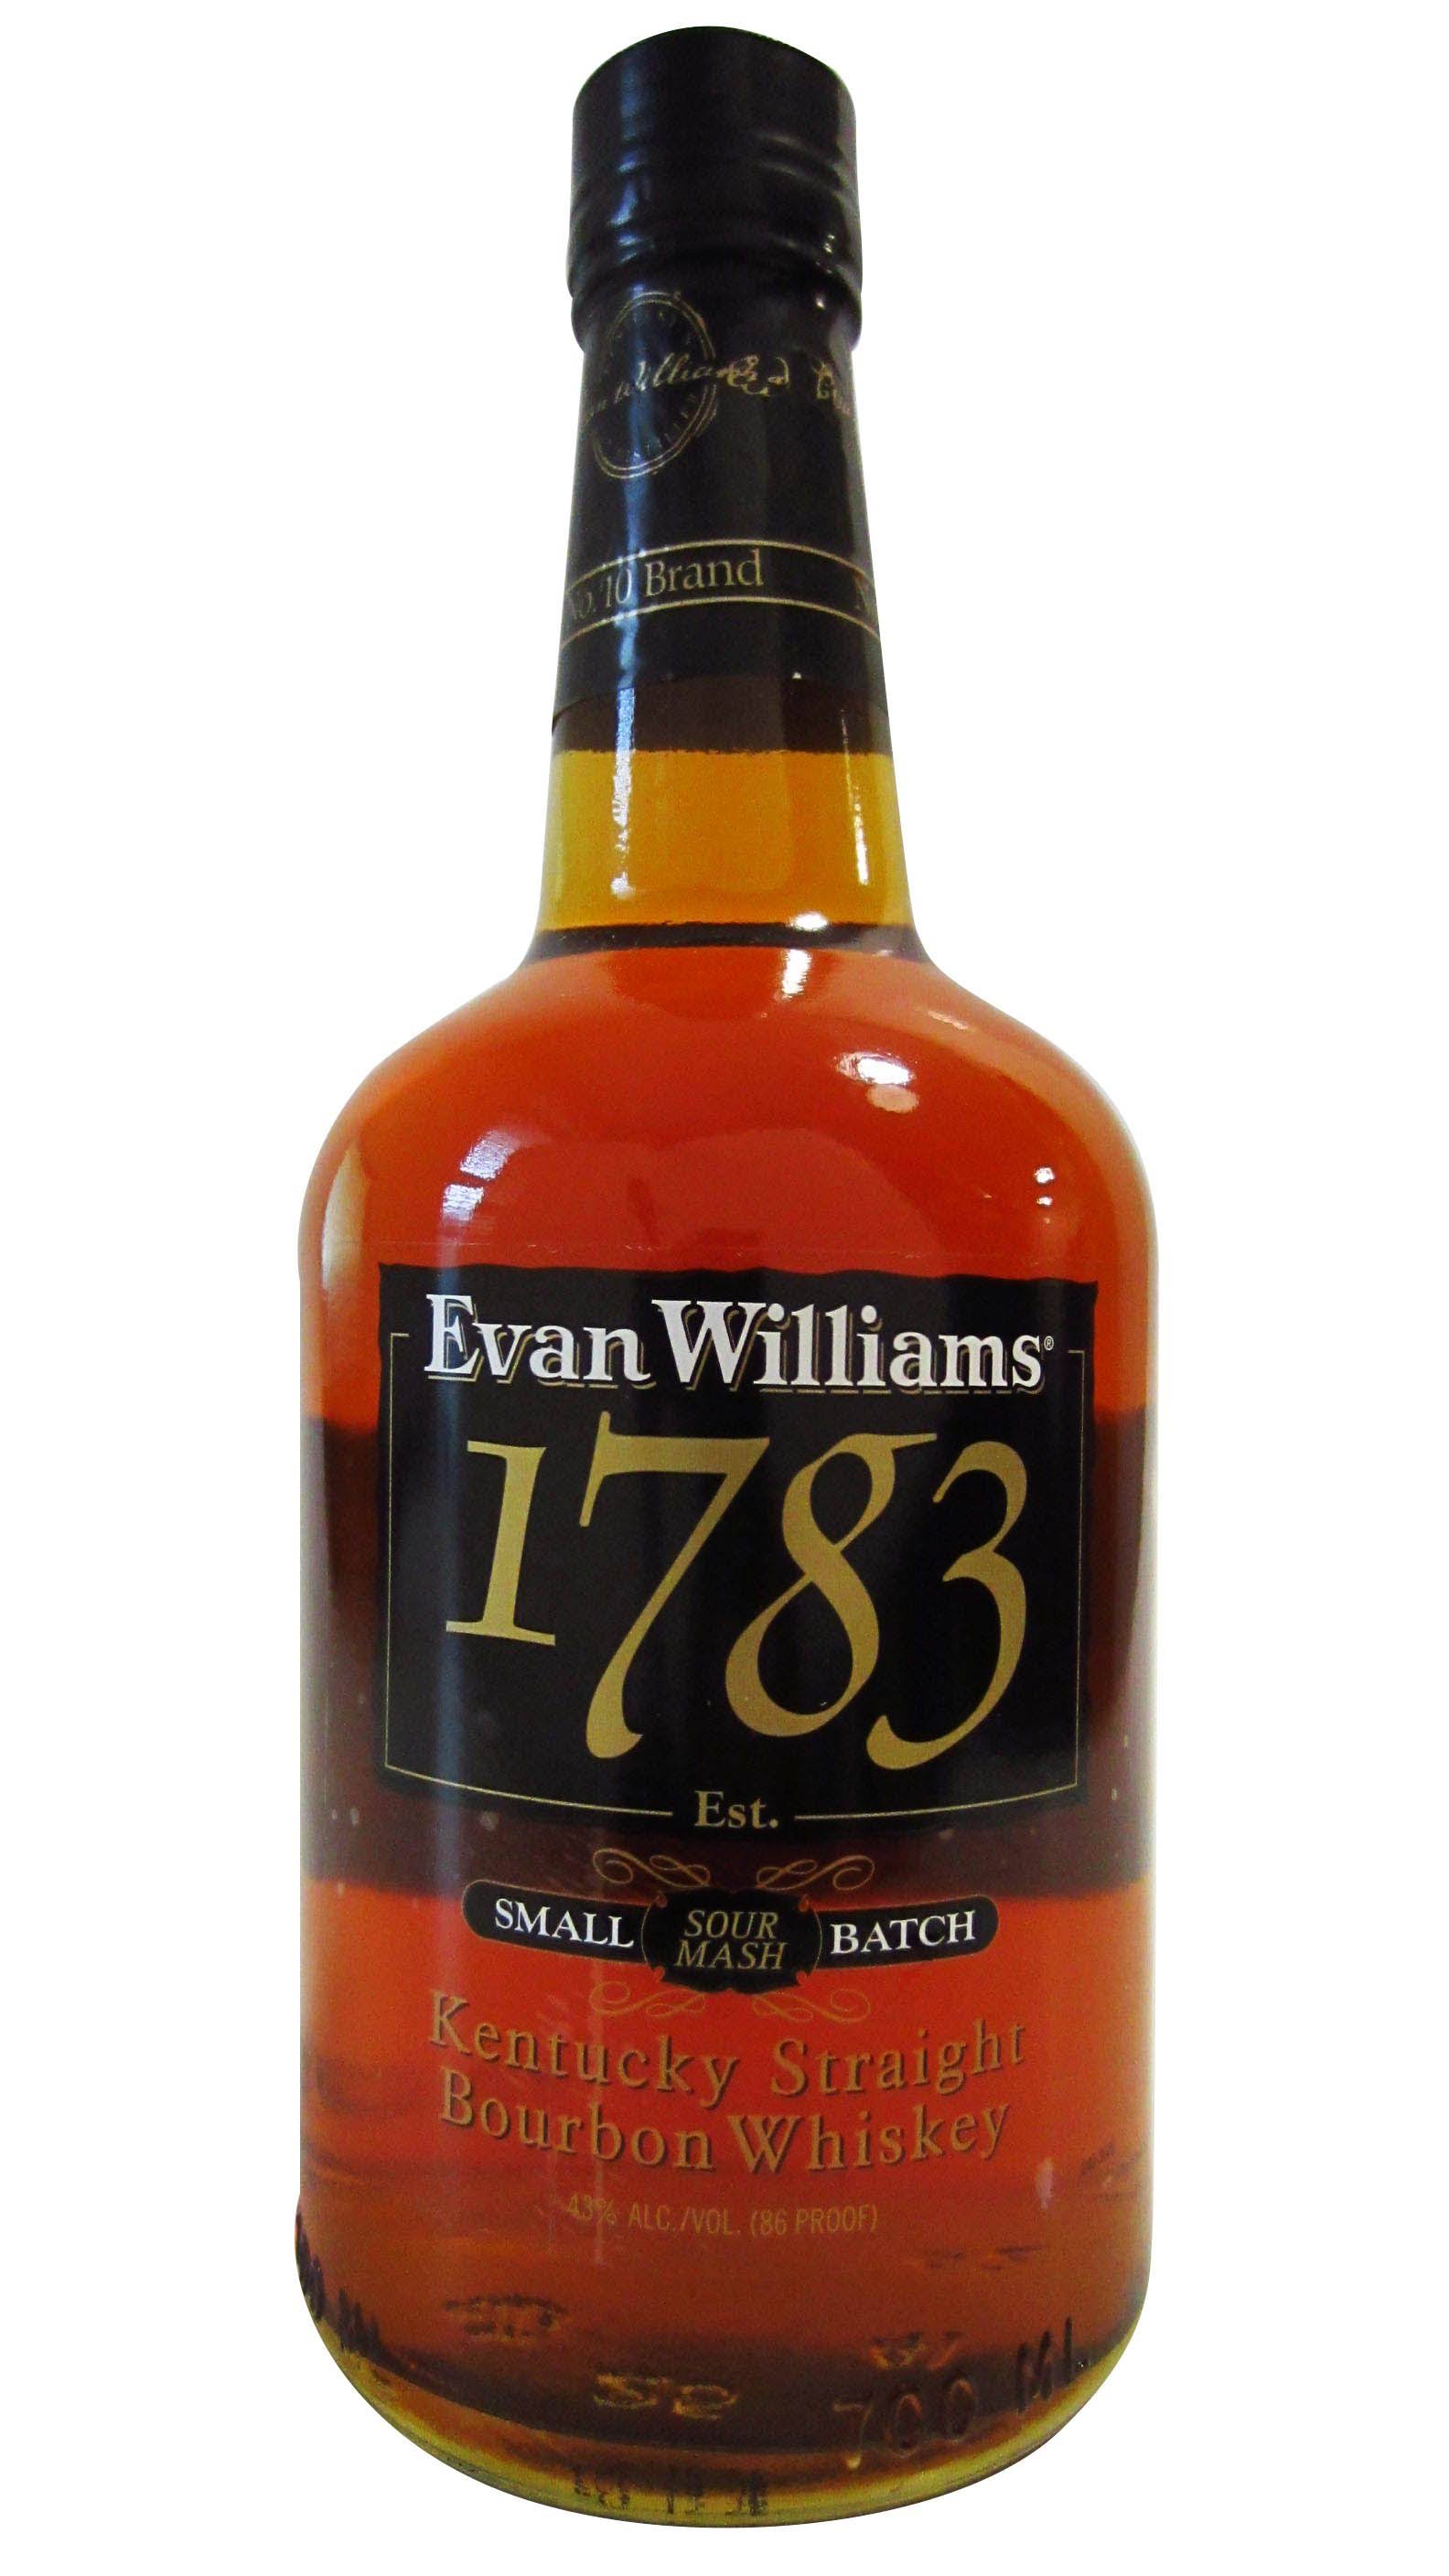 Evan Williams Kentucky Straight Bourbon Whisky